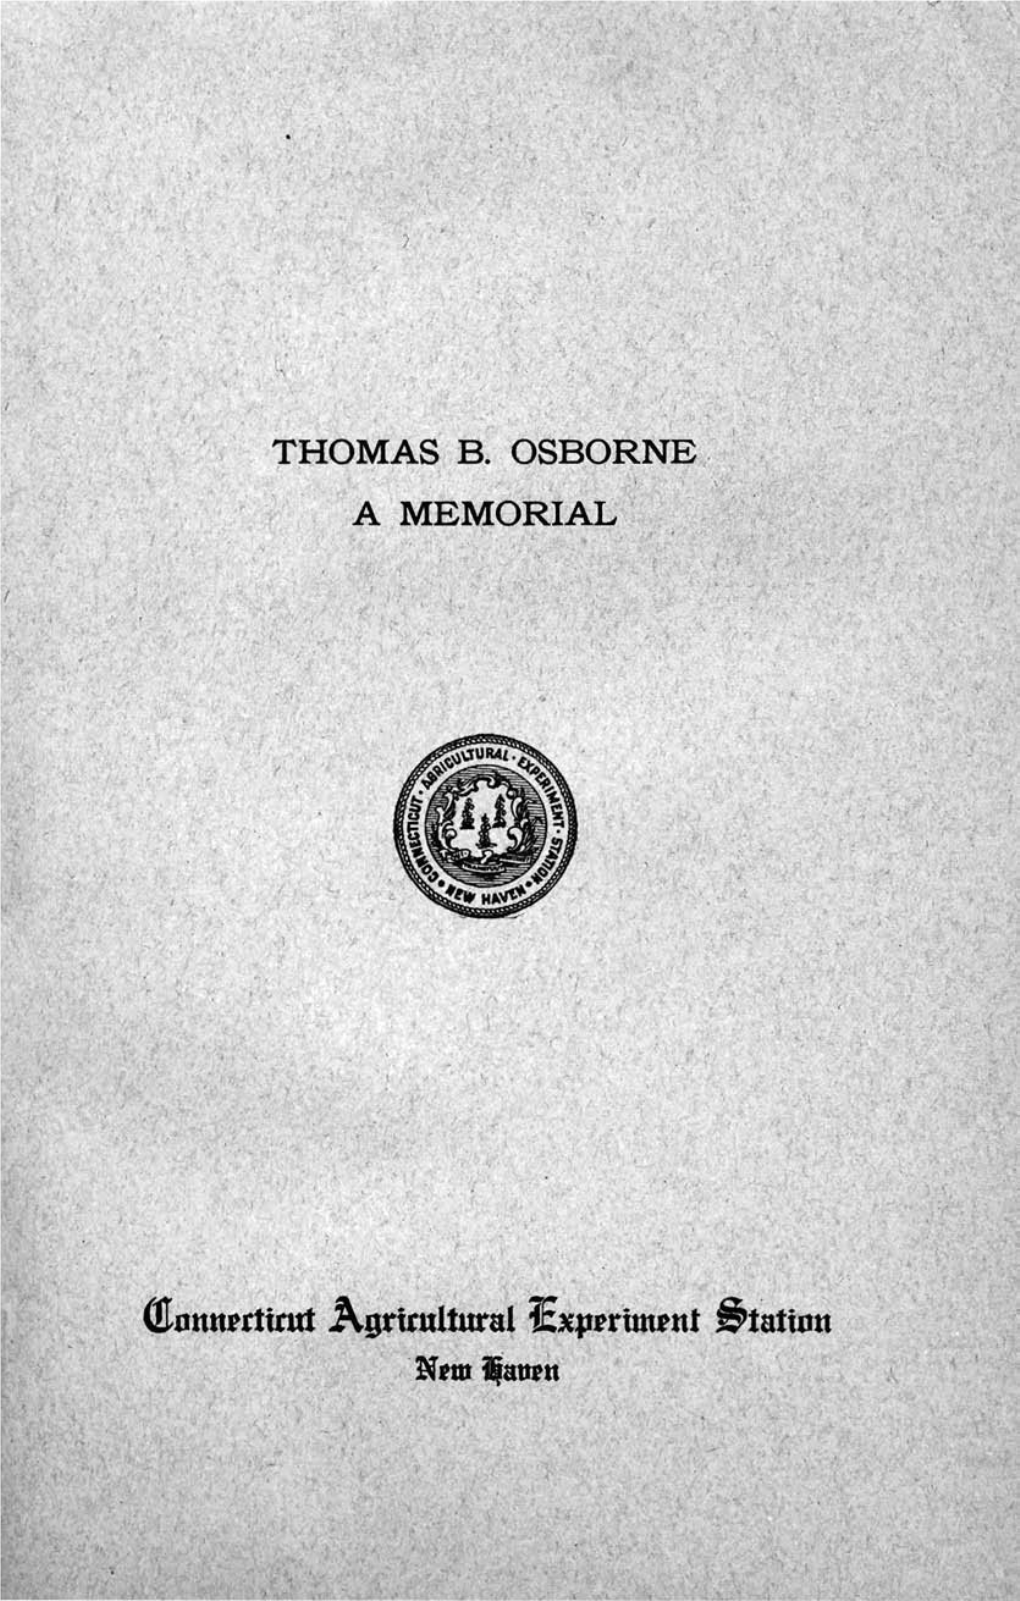 Thomas B. Osborne: a Memorial